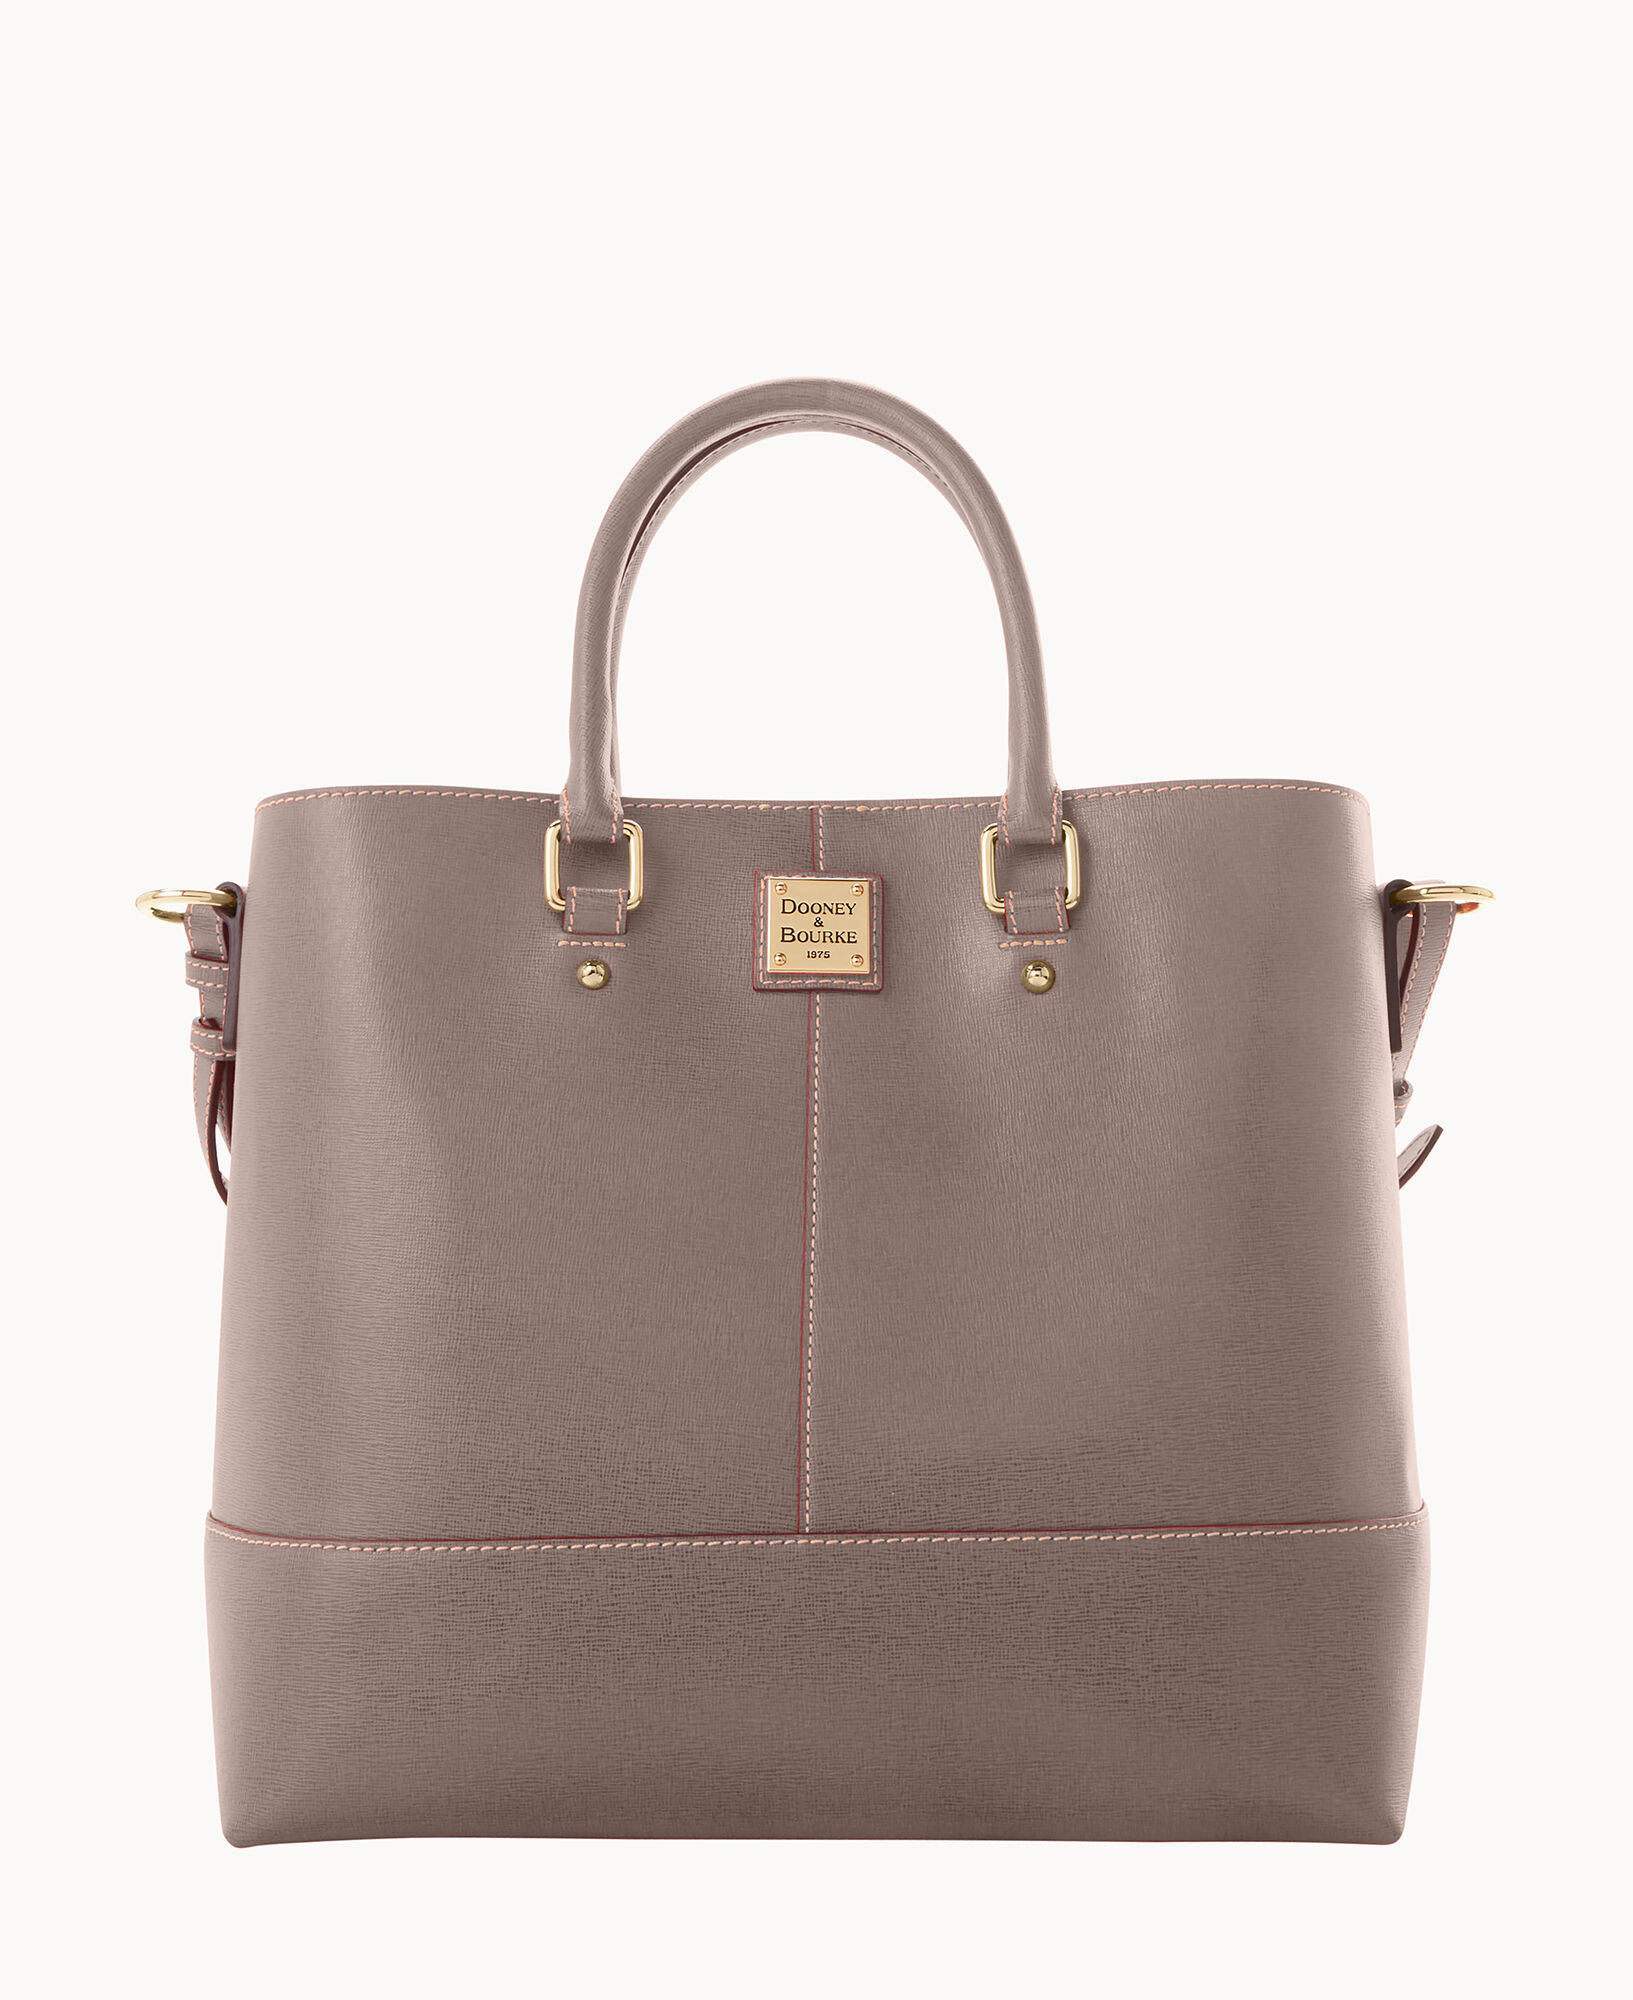 Dooney & Bourke Handbag, Saffiano Chelsea Tote - Natural: Handbags